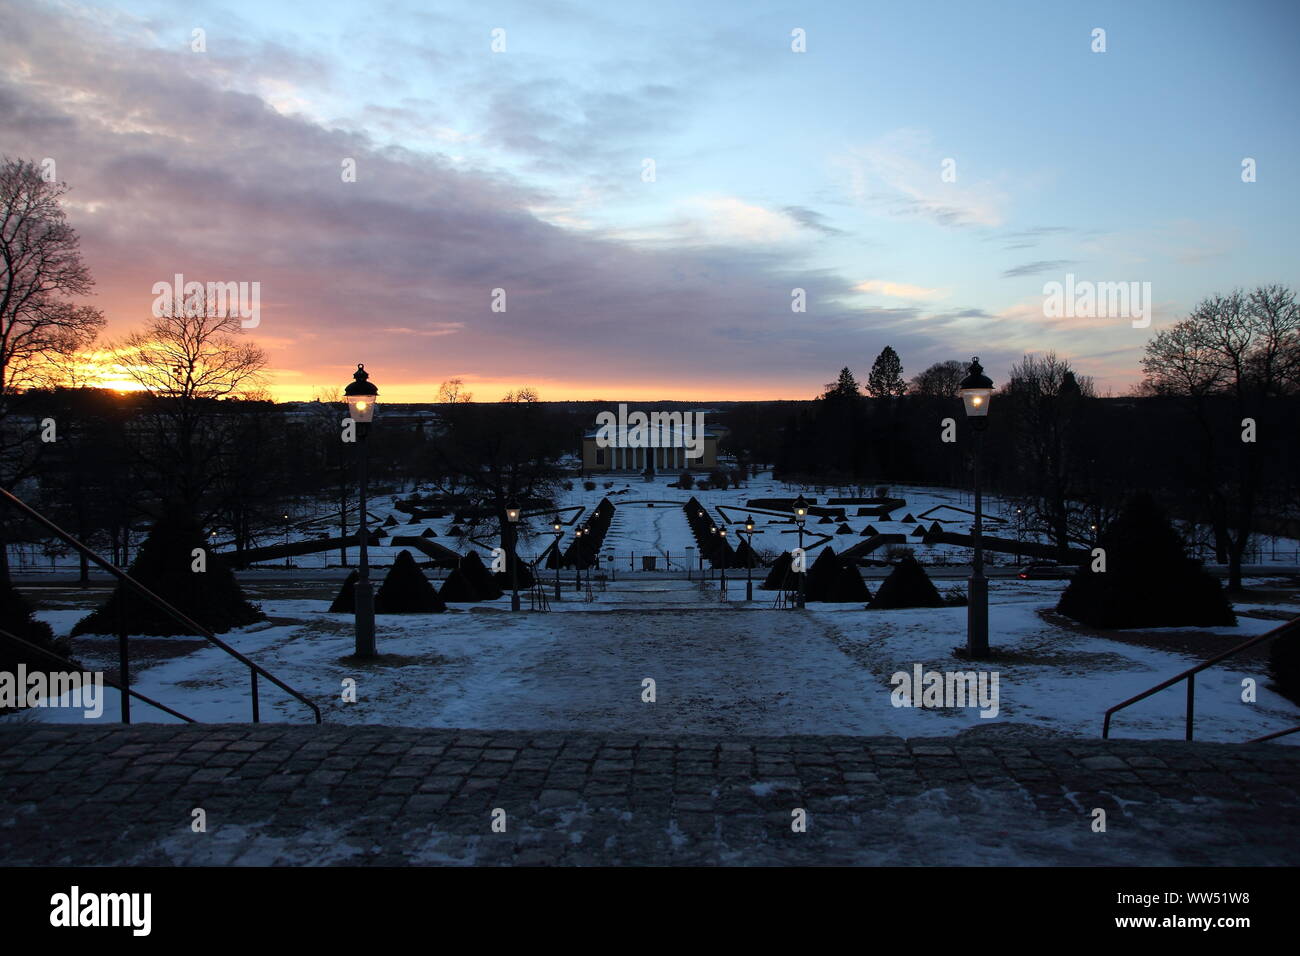 Sonnenuntergang über die Parks von Gunillaklockan in Uppsala Stockfoto